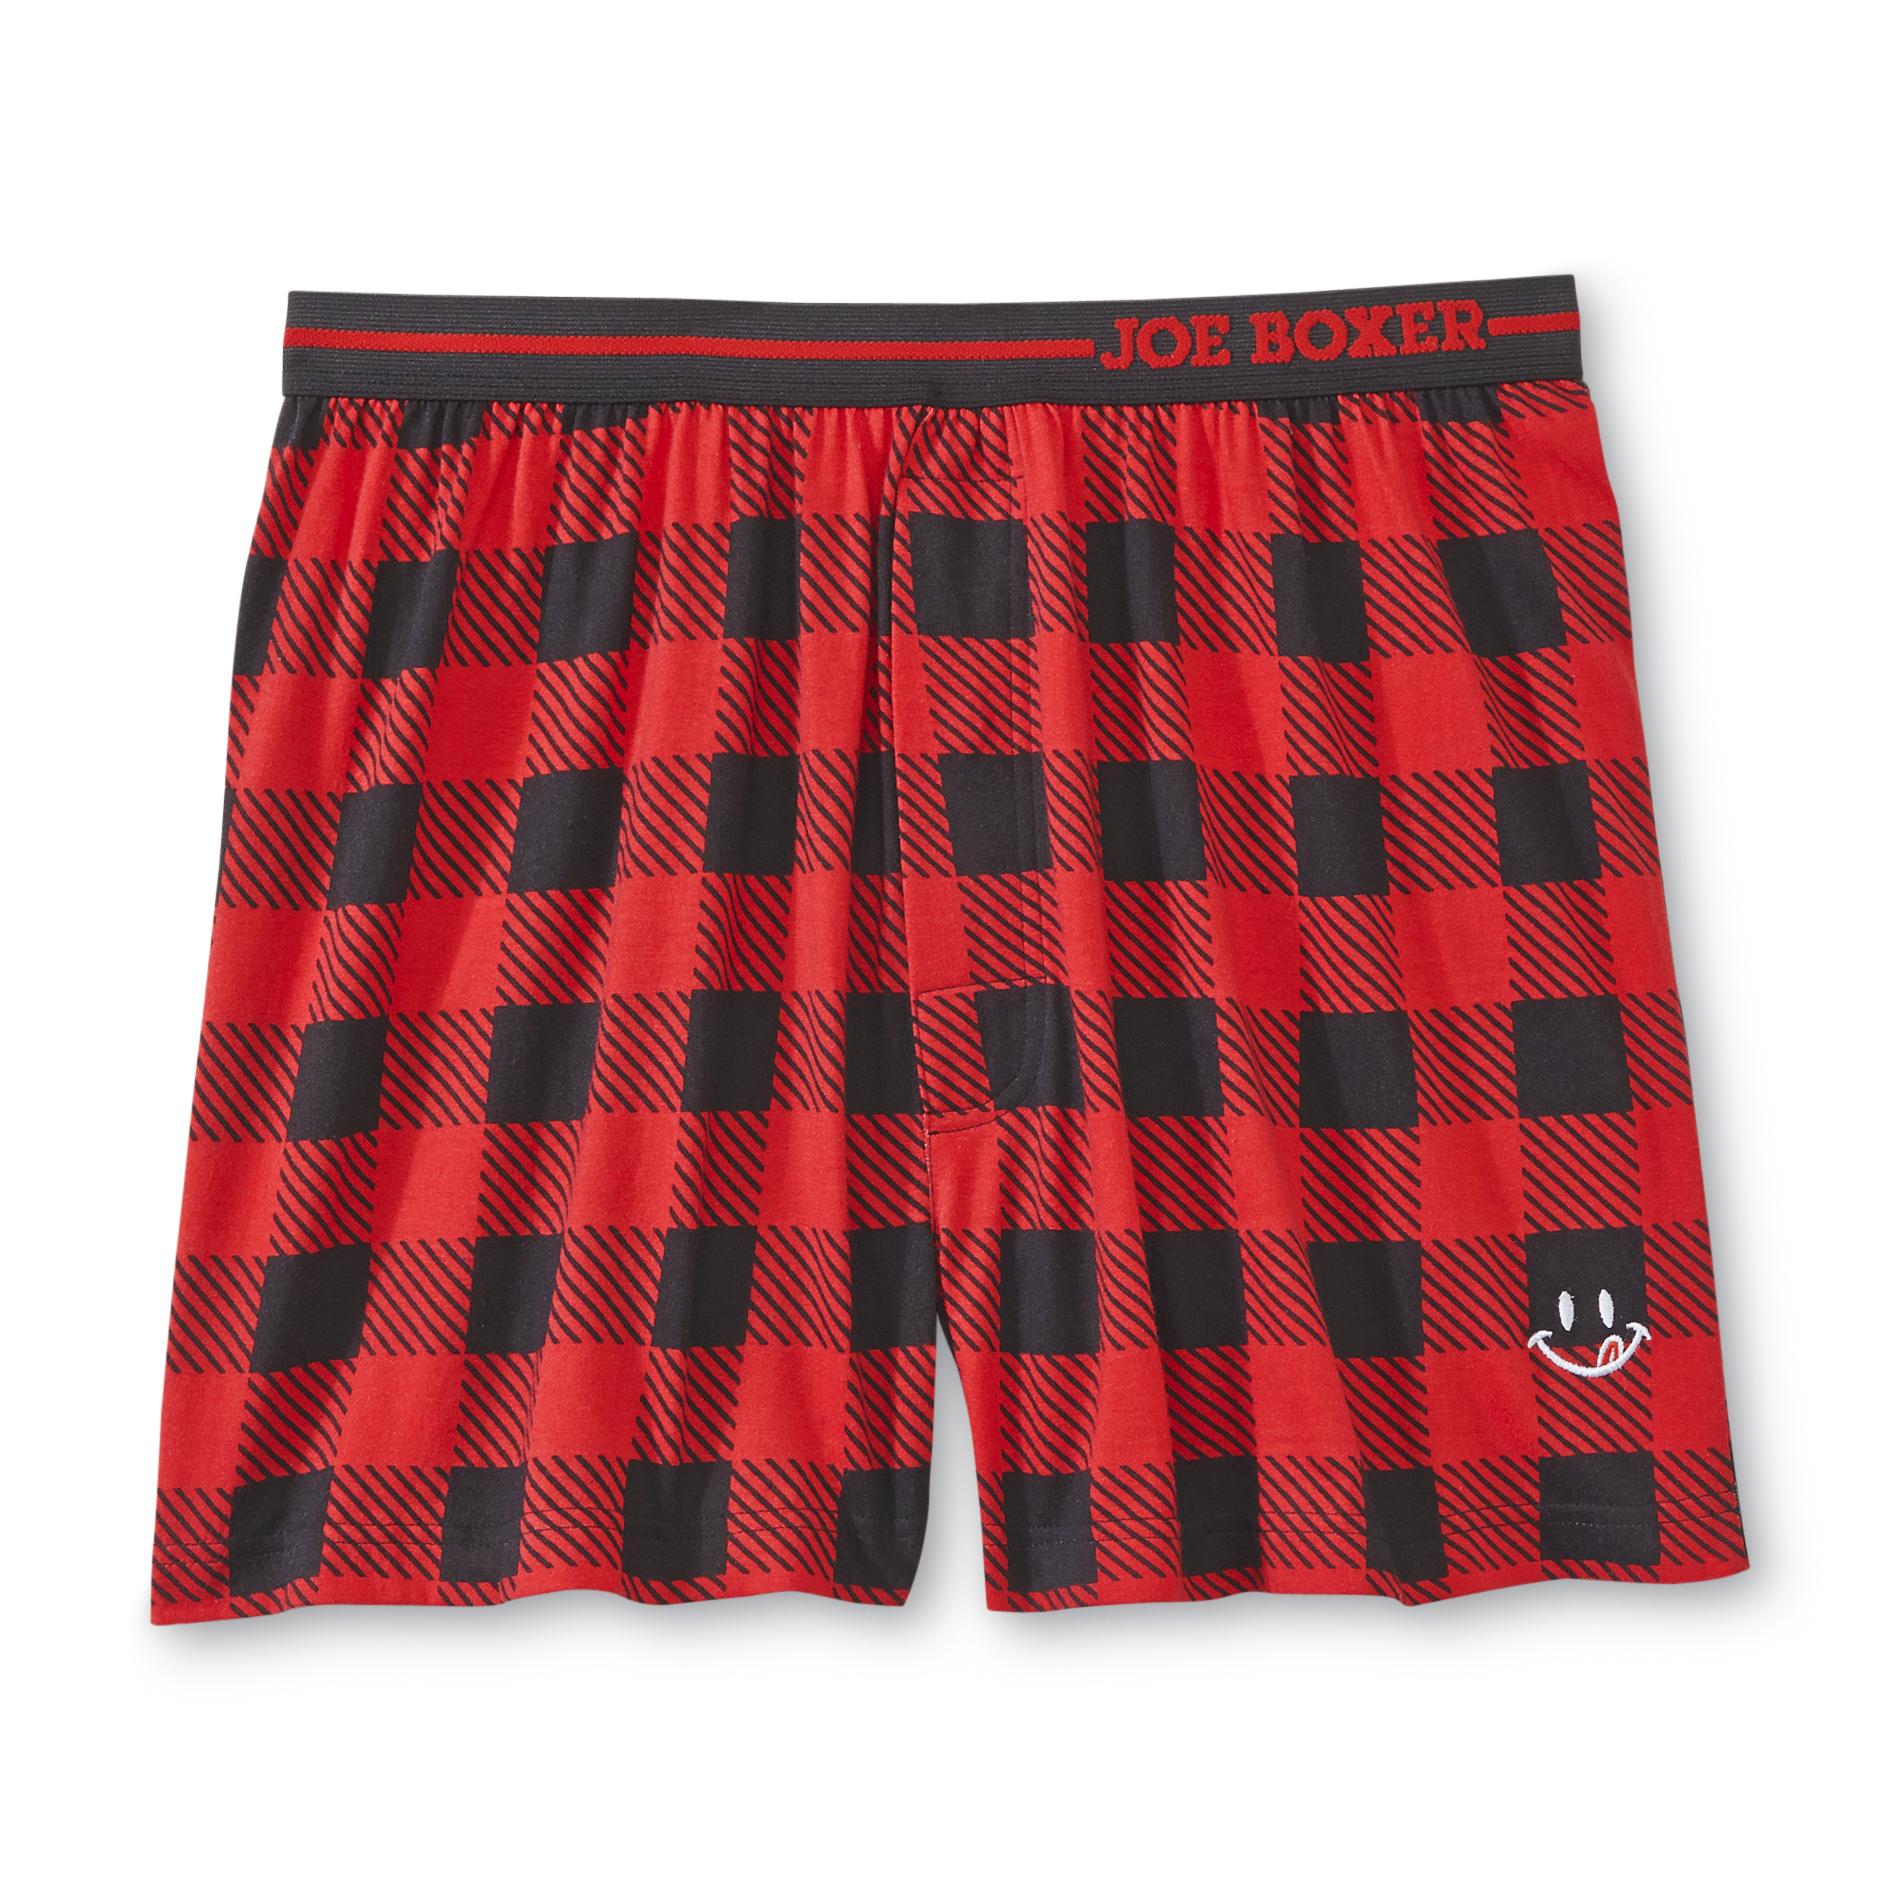 Joe Boxer Men's Knit Boxer Shorts - Buffalo Check Plaid